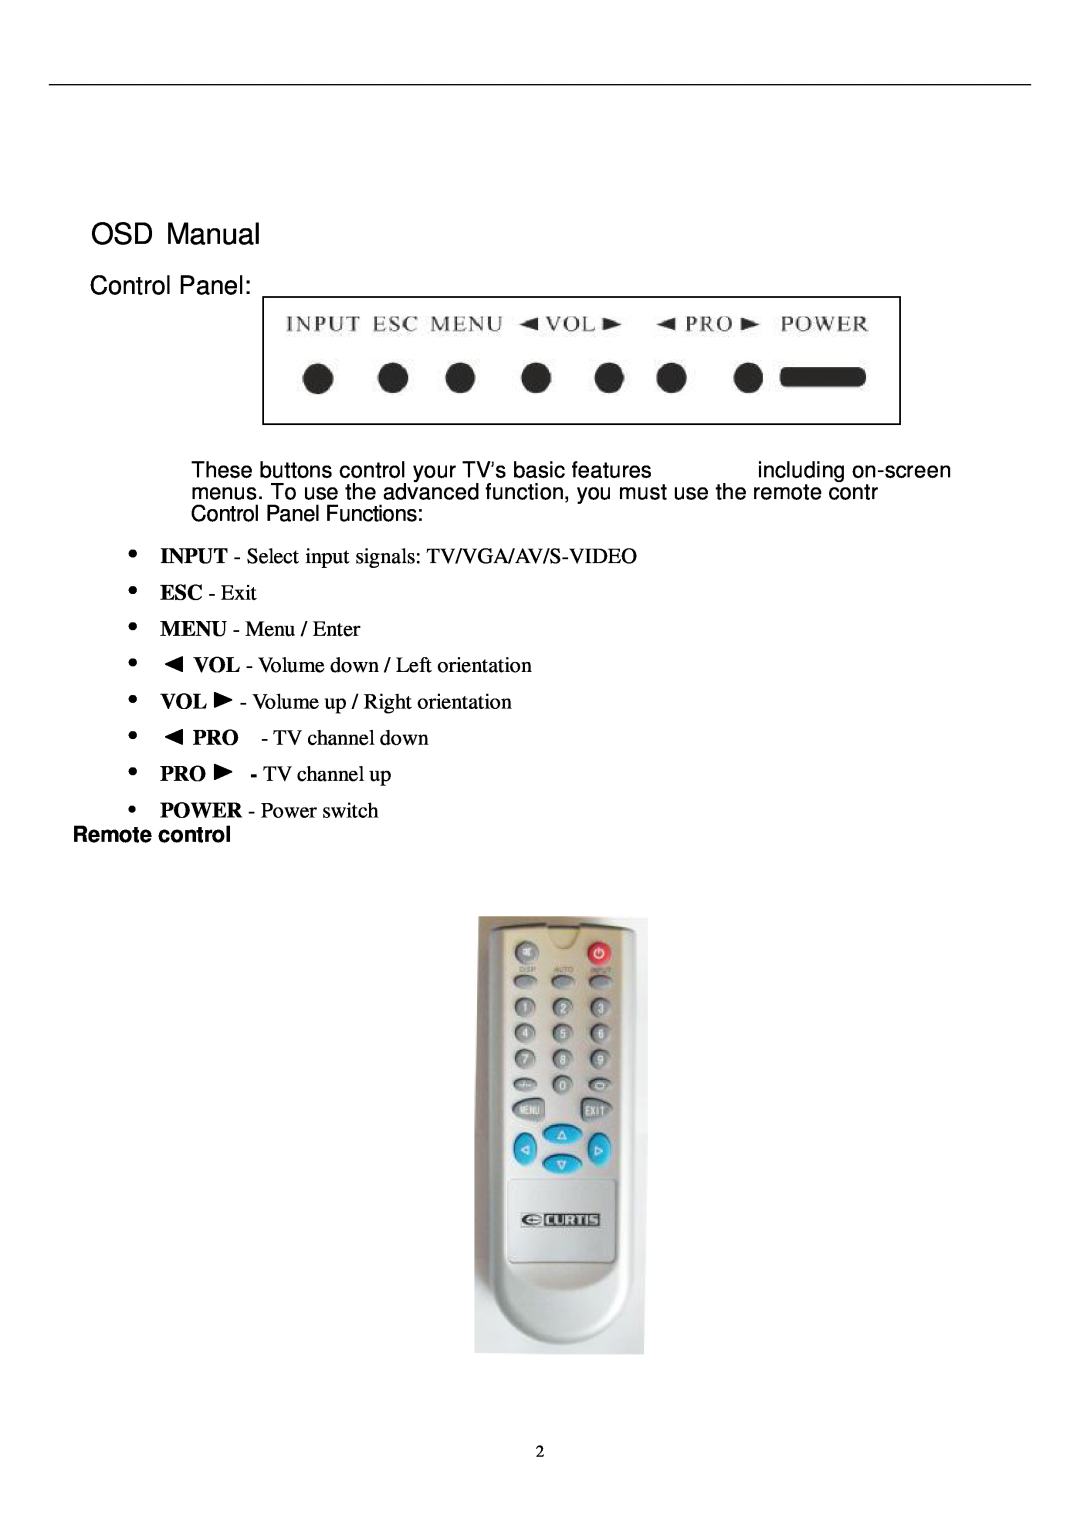 Curtis LCD1575 manual OSD Manual, Control Panel, Remote control 